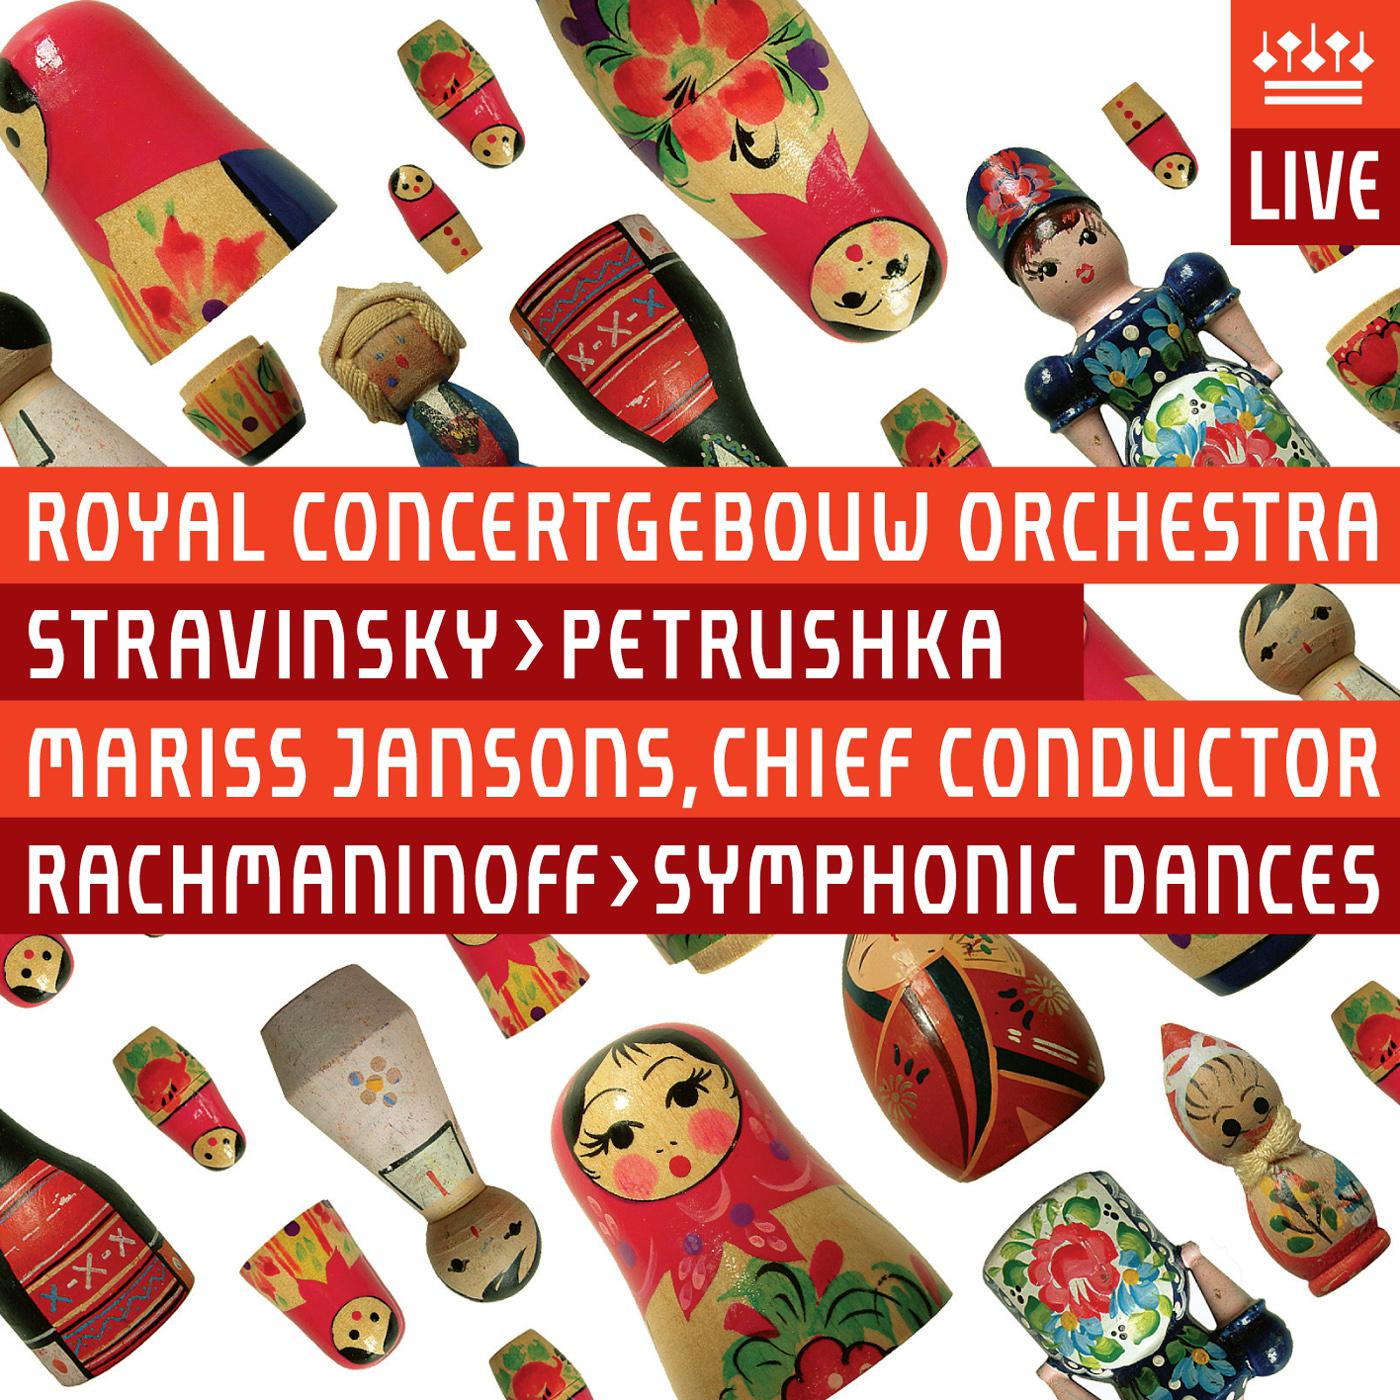 STRAVINSKY, I.: Petrushka / RACHMANINOV, S.: Symphonic Dances (Royal Concertgebouw Orchestra, Jansons)